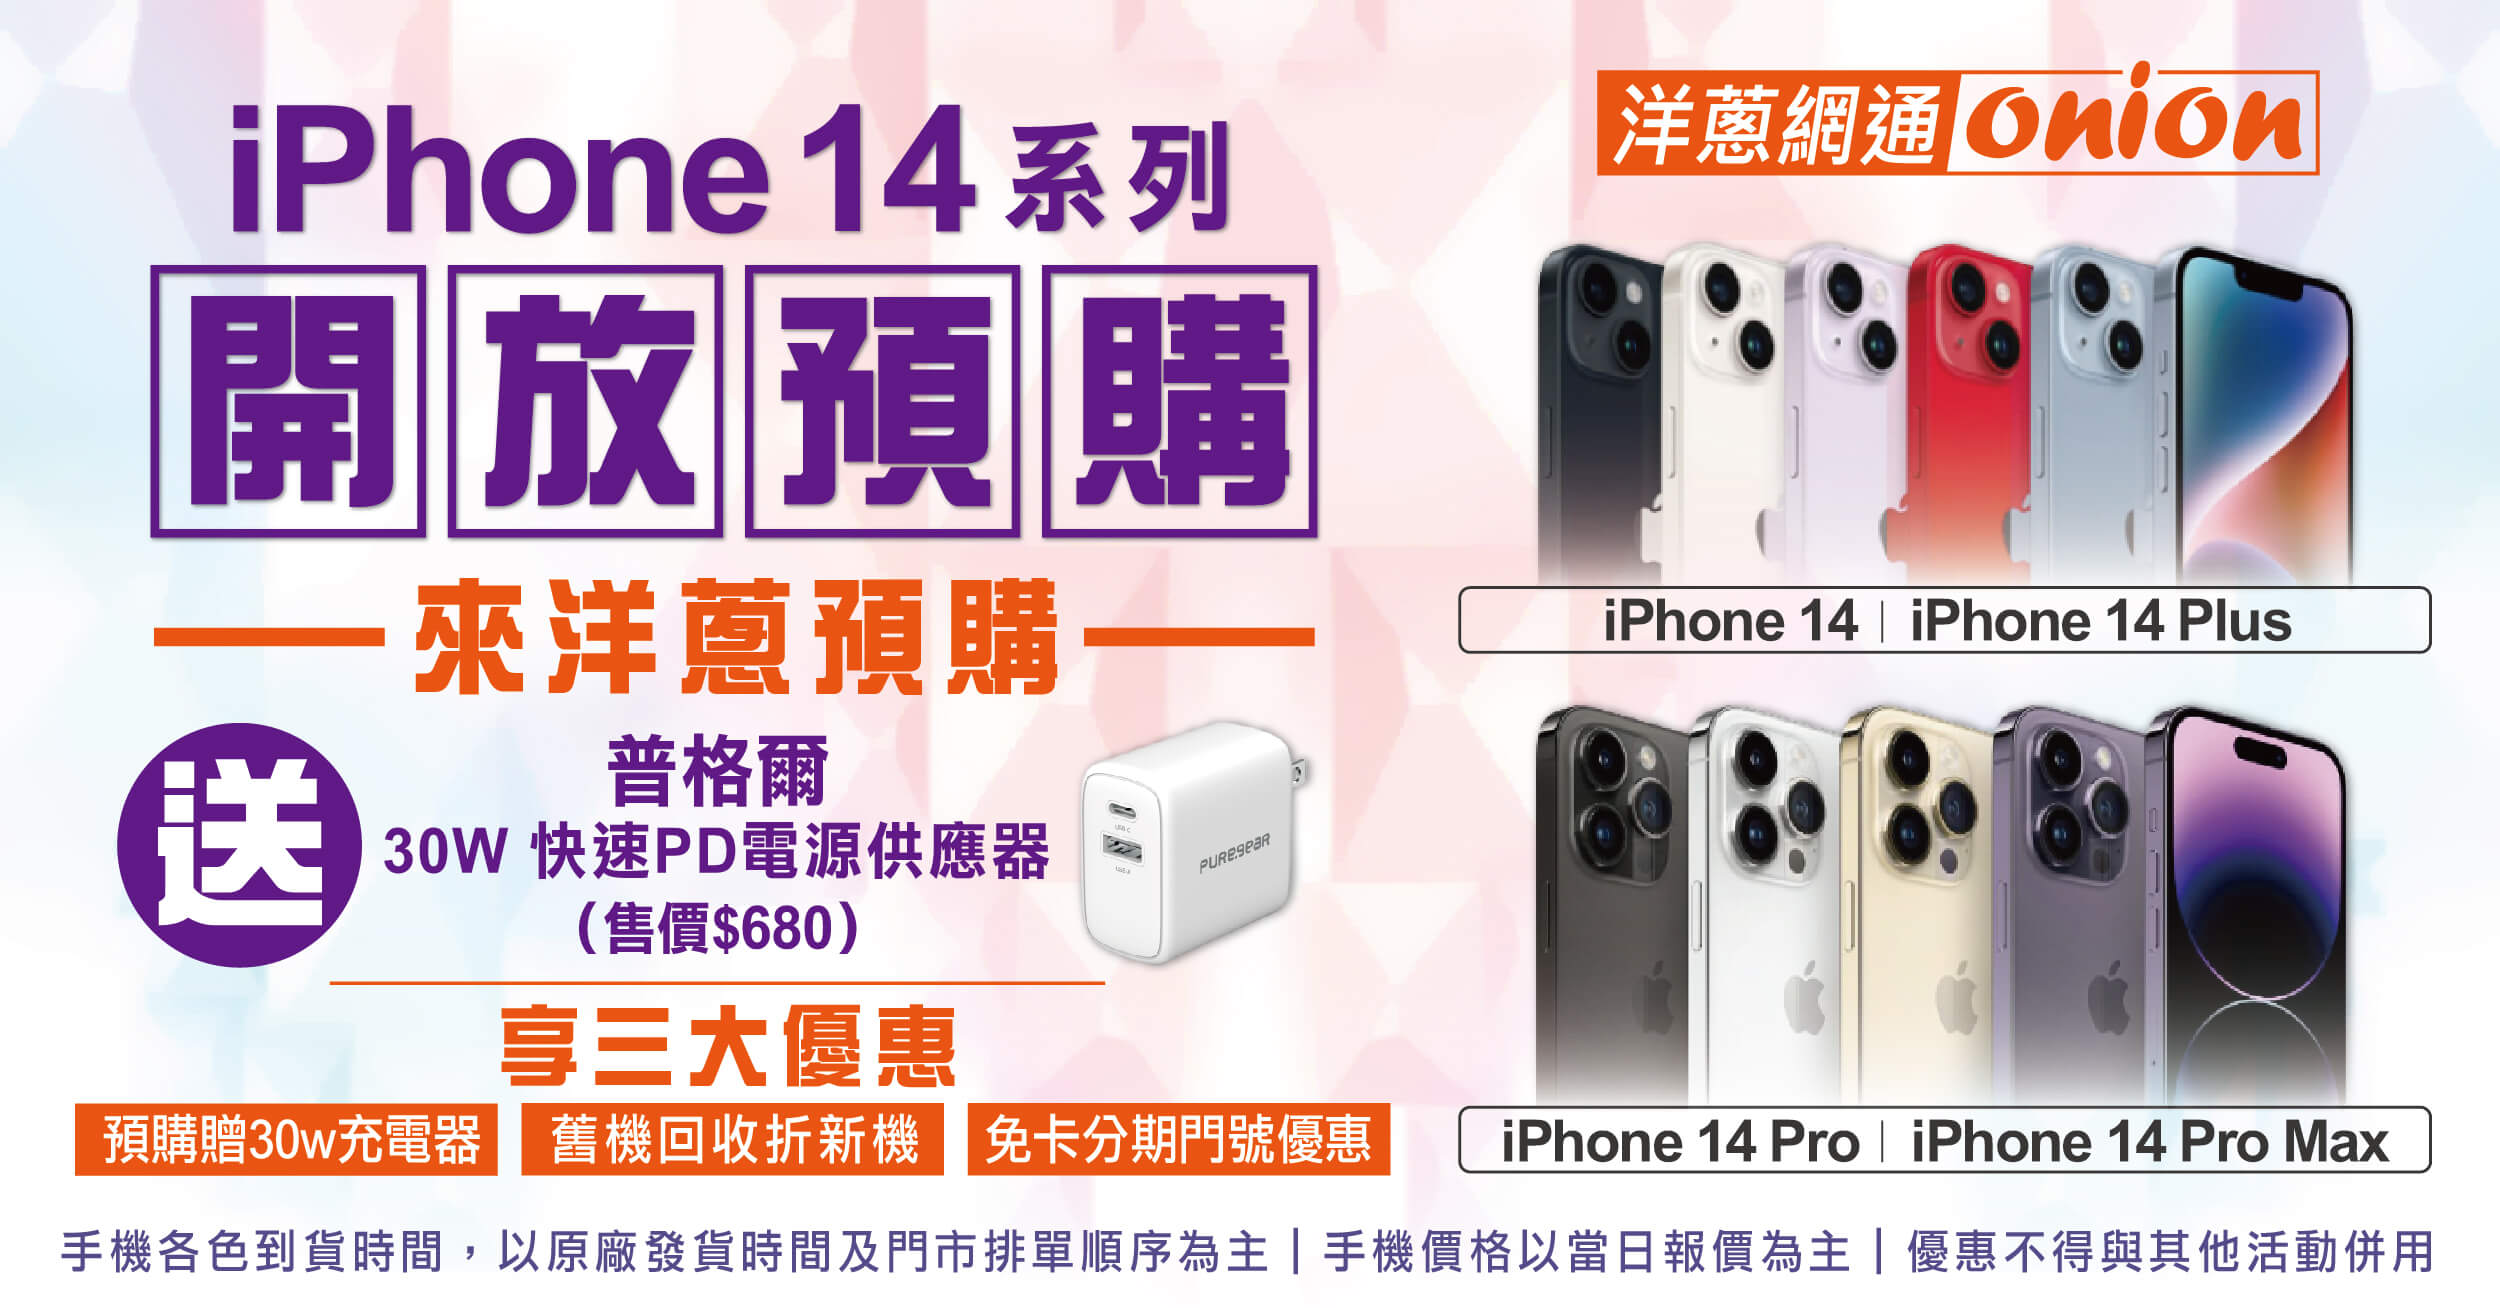 【iPhone14預購】買就送快速充電頭，再享手機舊換新、門號折扣等多項優惠